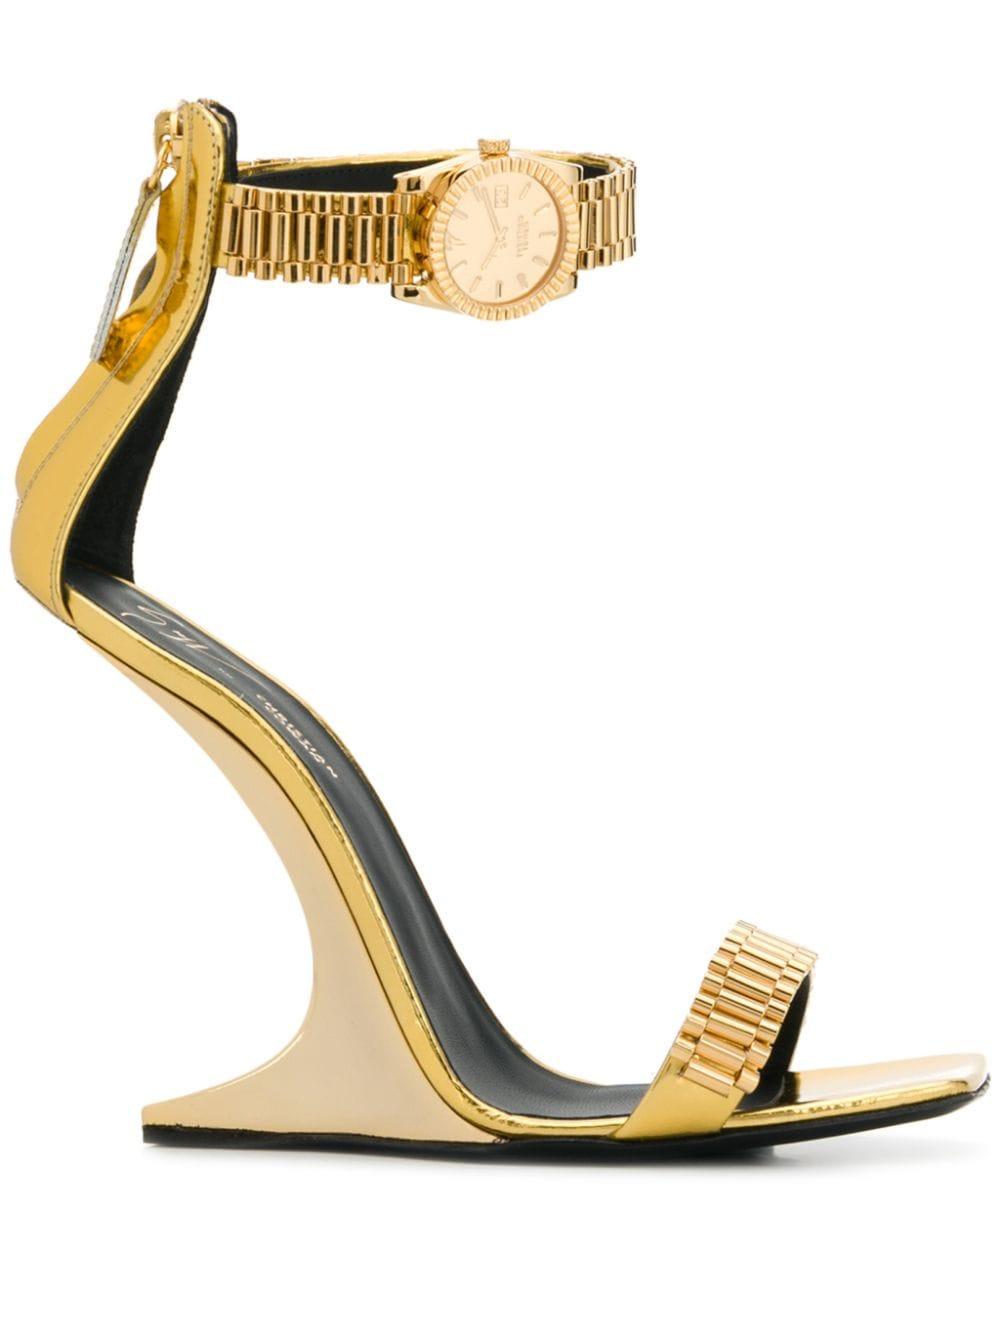 Giuseppe Zanotti X Cowan Watch Sandals in Metallic | Lyst